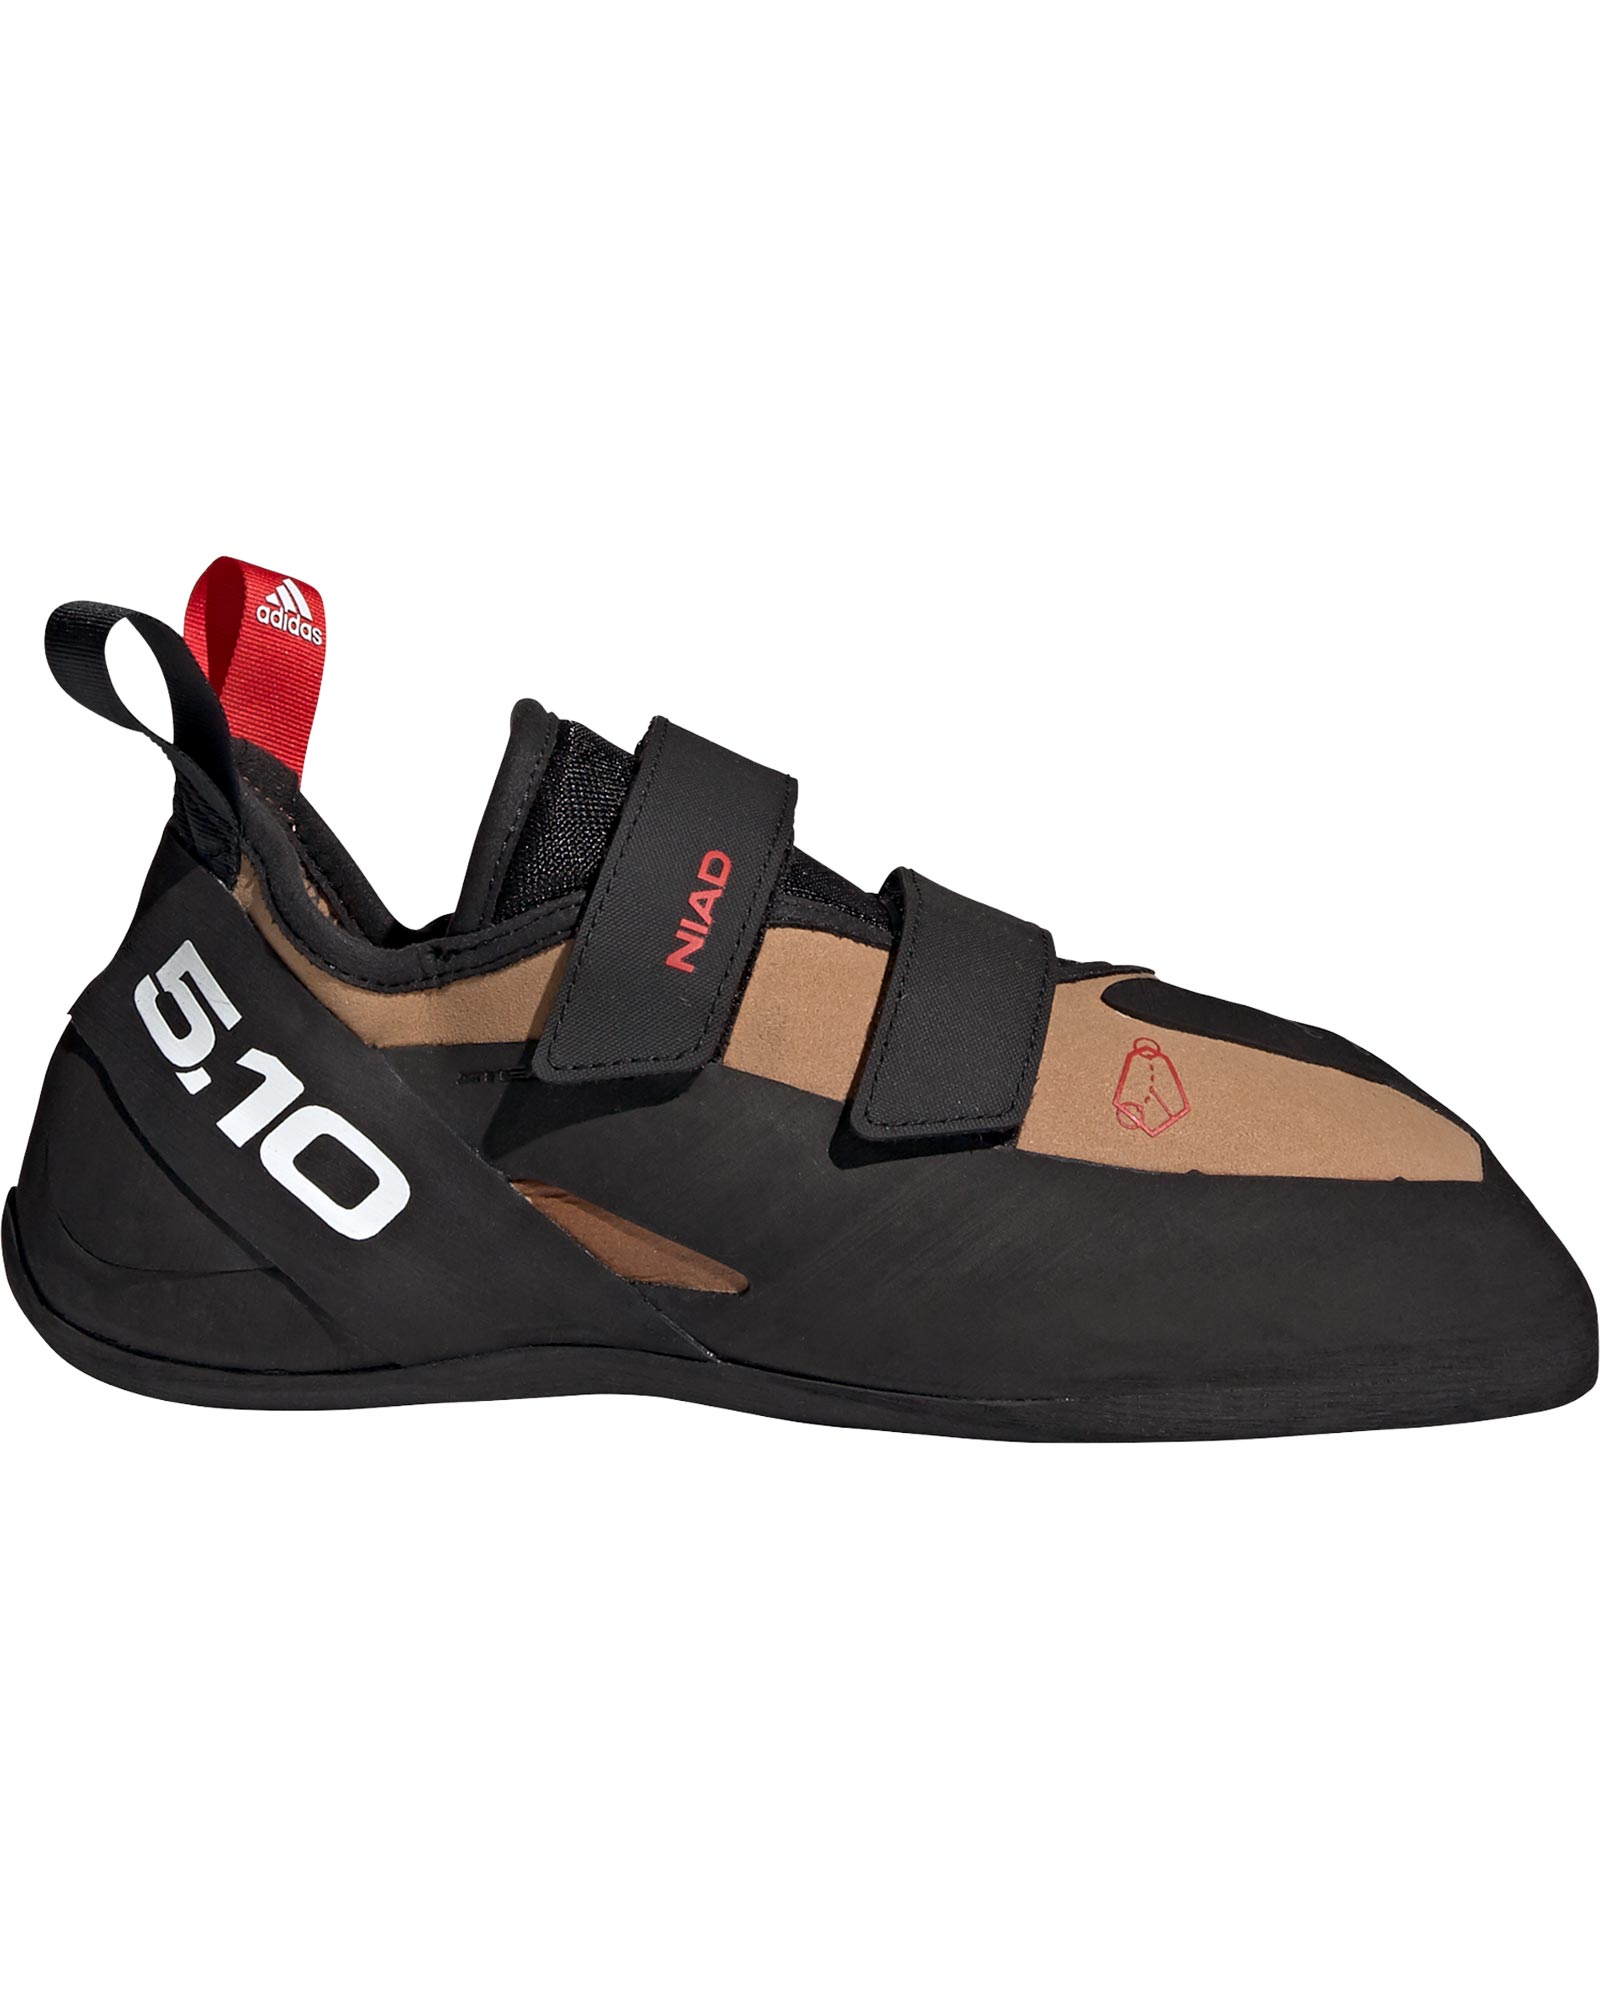 adidas Five Ten NIAD Velcro Men’s Shoes - Mesa/Core Black/Ftwr White UK 10.5